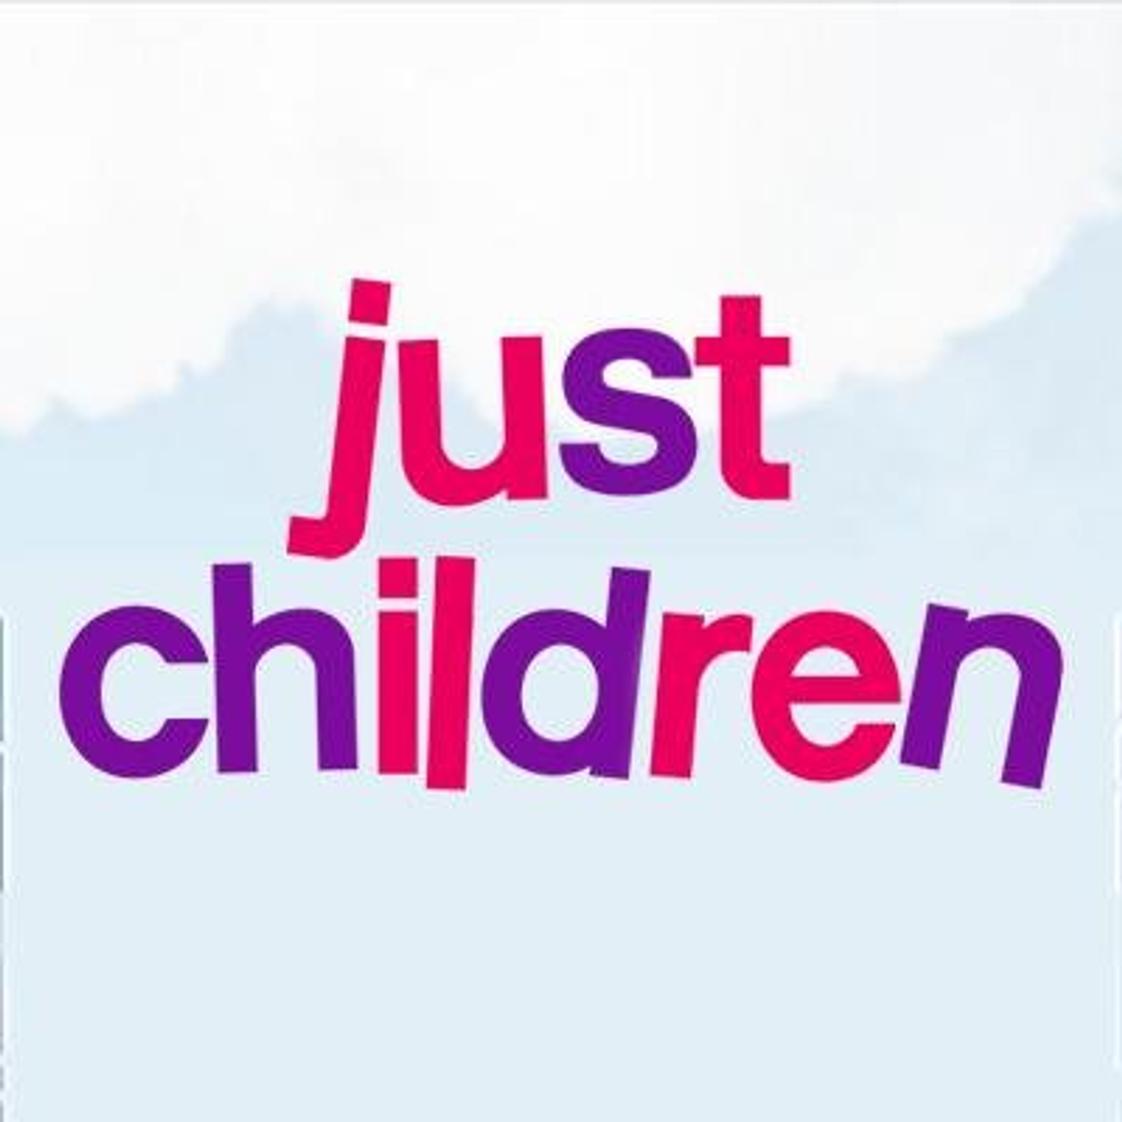 Just Children Child Care Center Photo #1